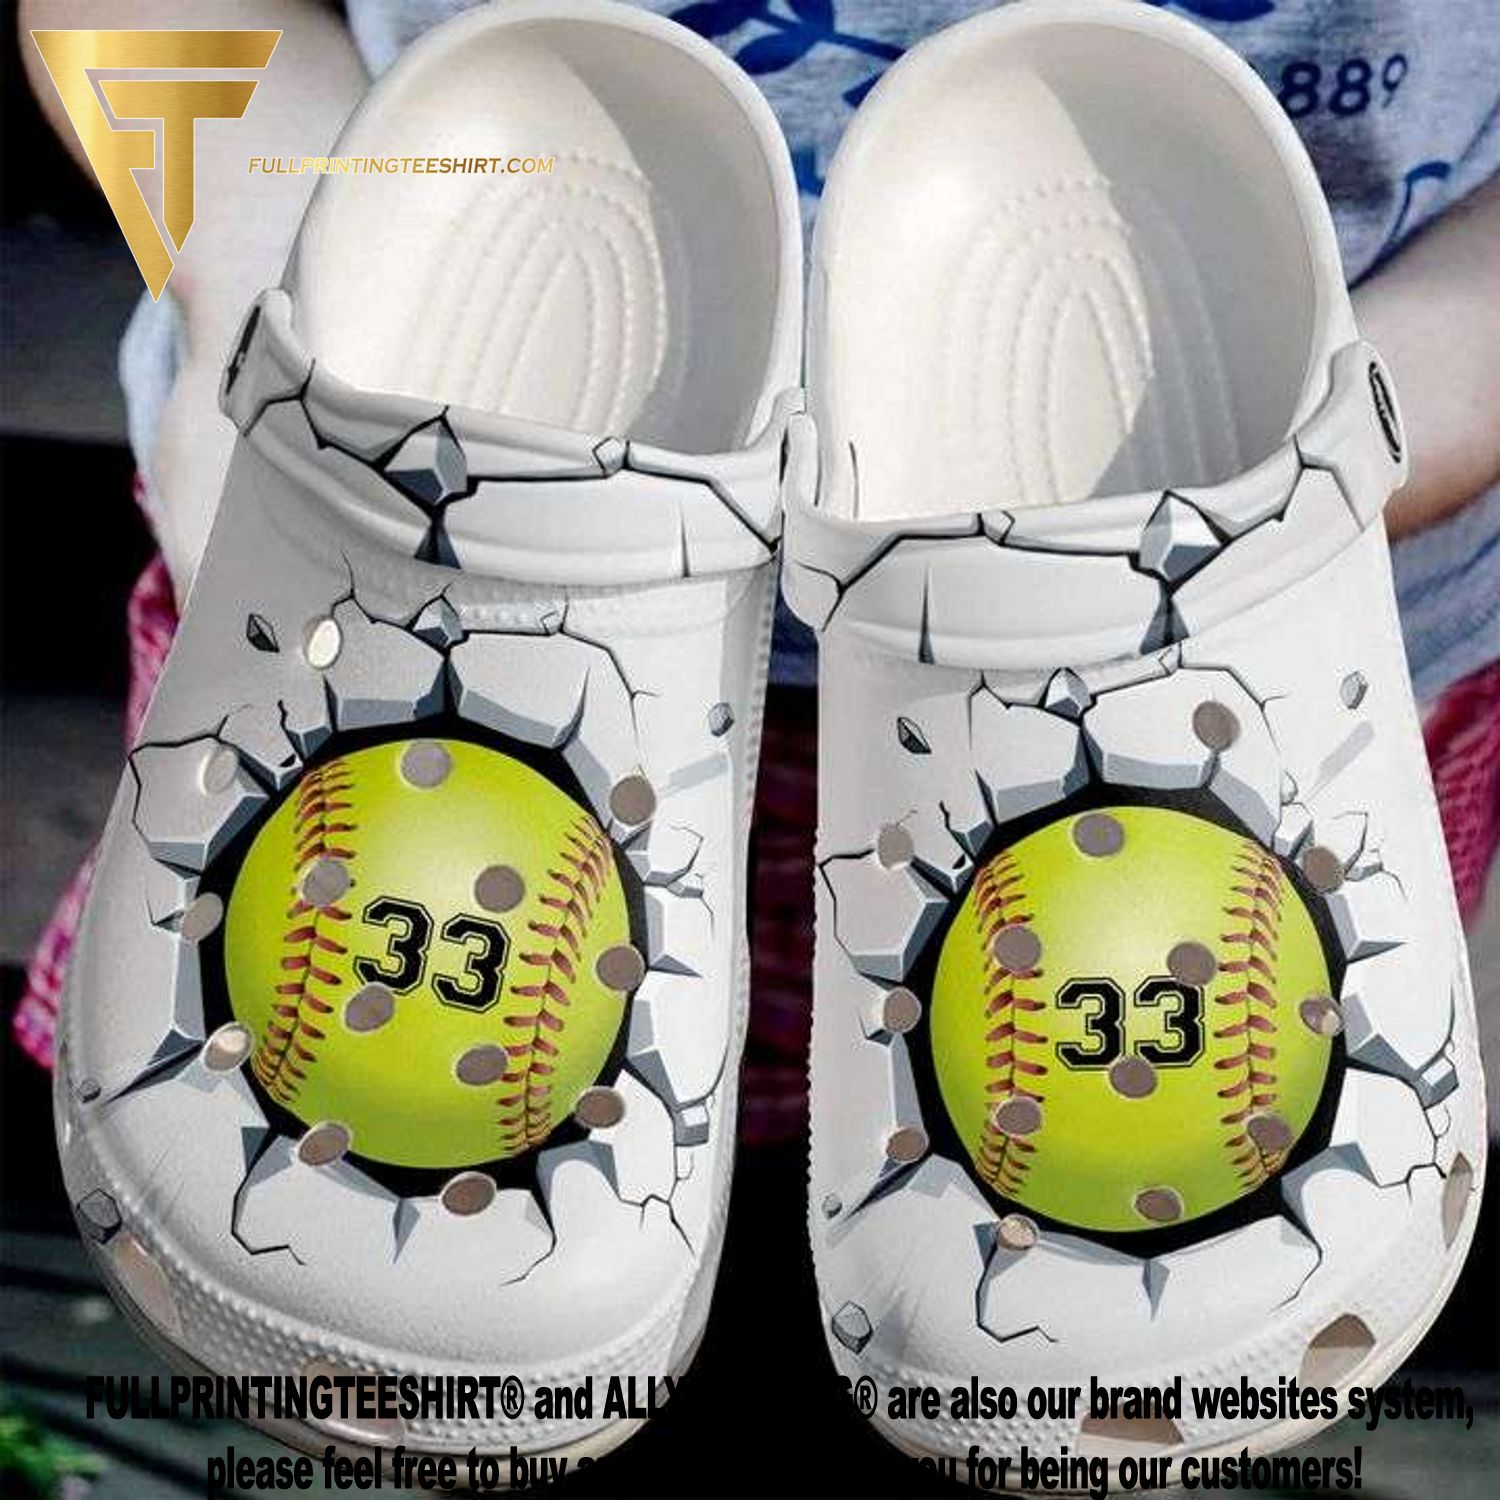 Top-selling Item] Baseball croc number custom Crocs Unisex Crocband Clogs